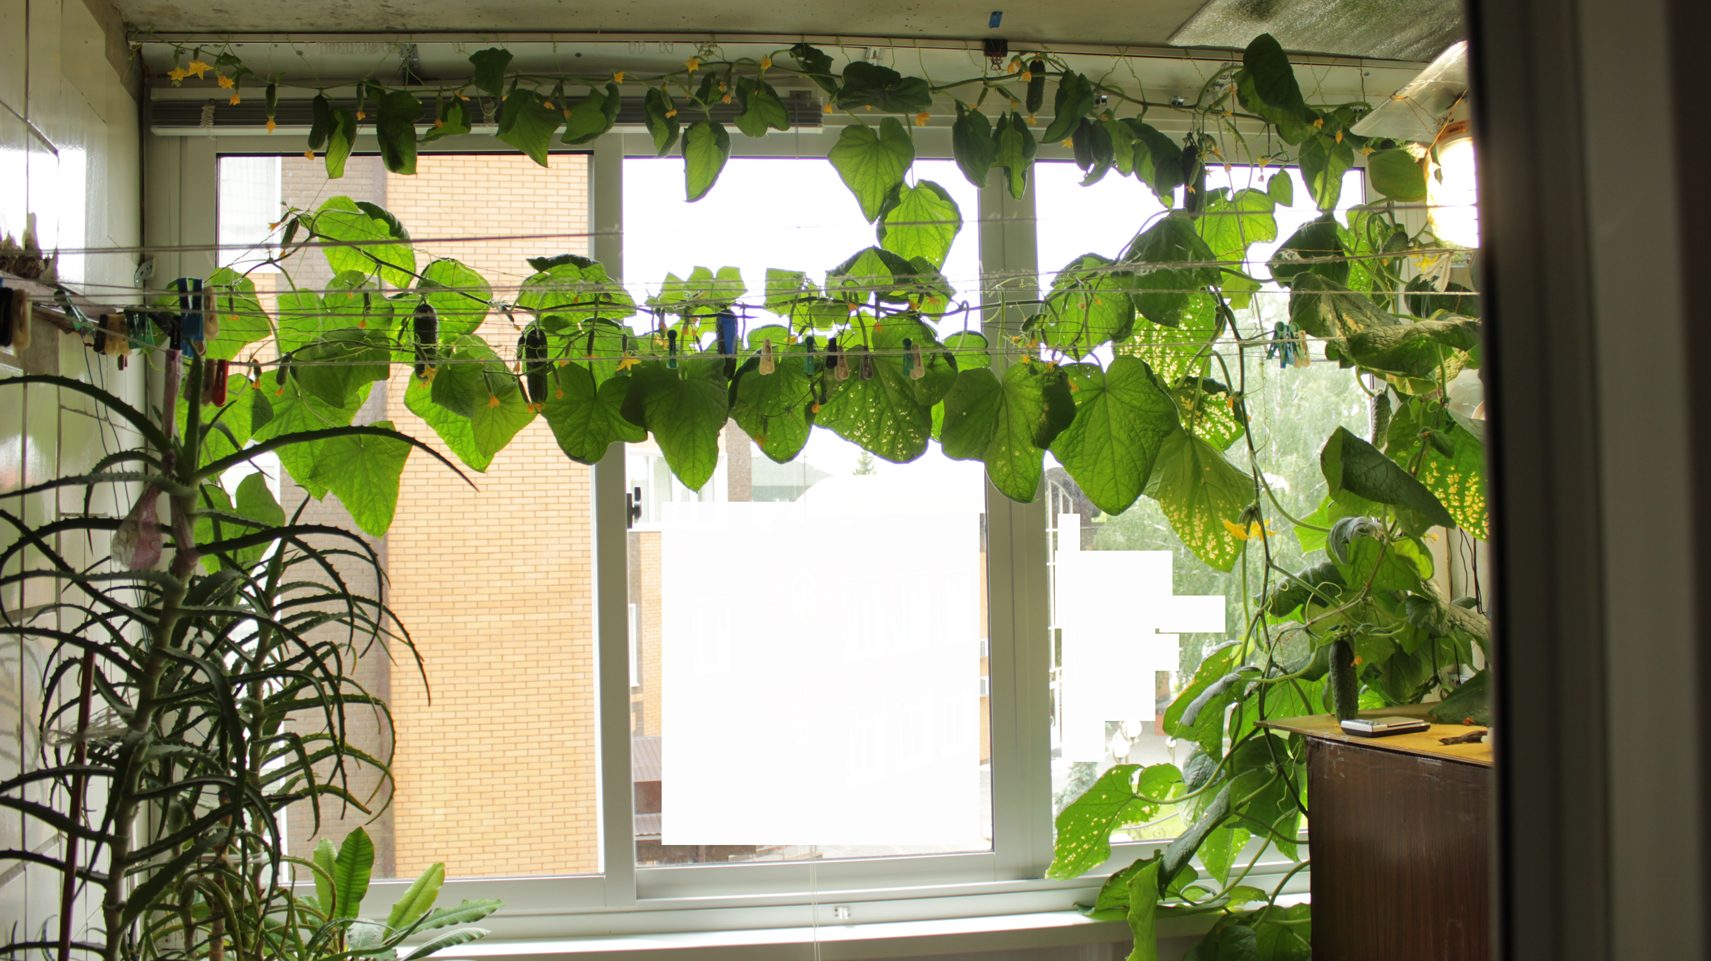 Выращивание огурцов на балконе в домашних условиях. Огурцы на балконе. Вырастить огурцы на балконе. Подвязка огурцов на балконе. Балконные огурцы на балконе.